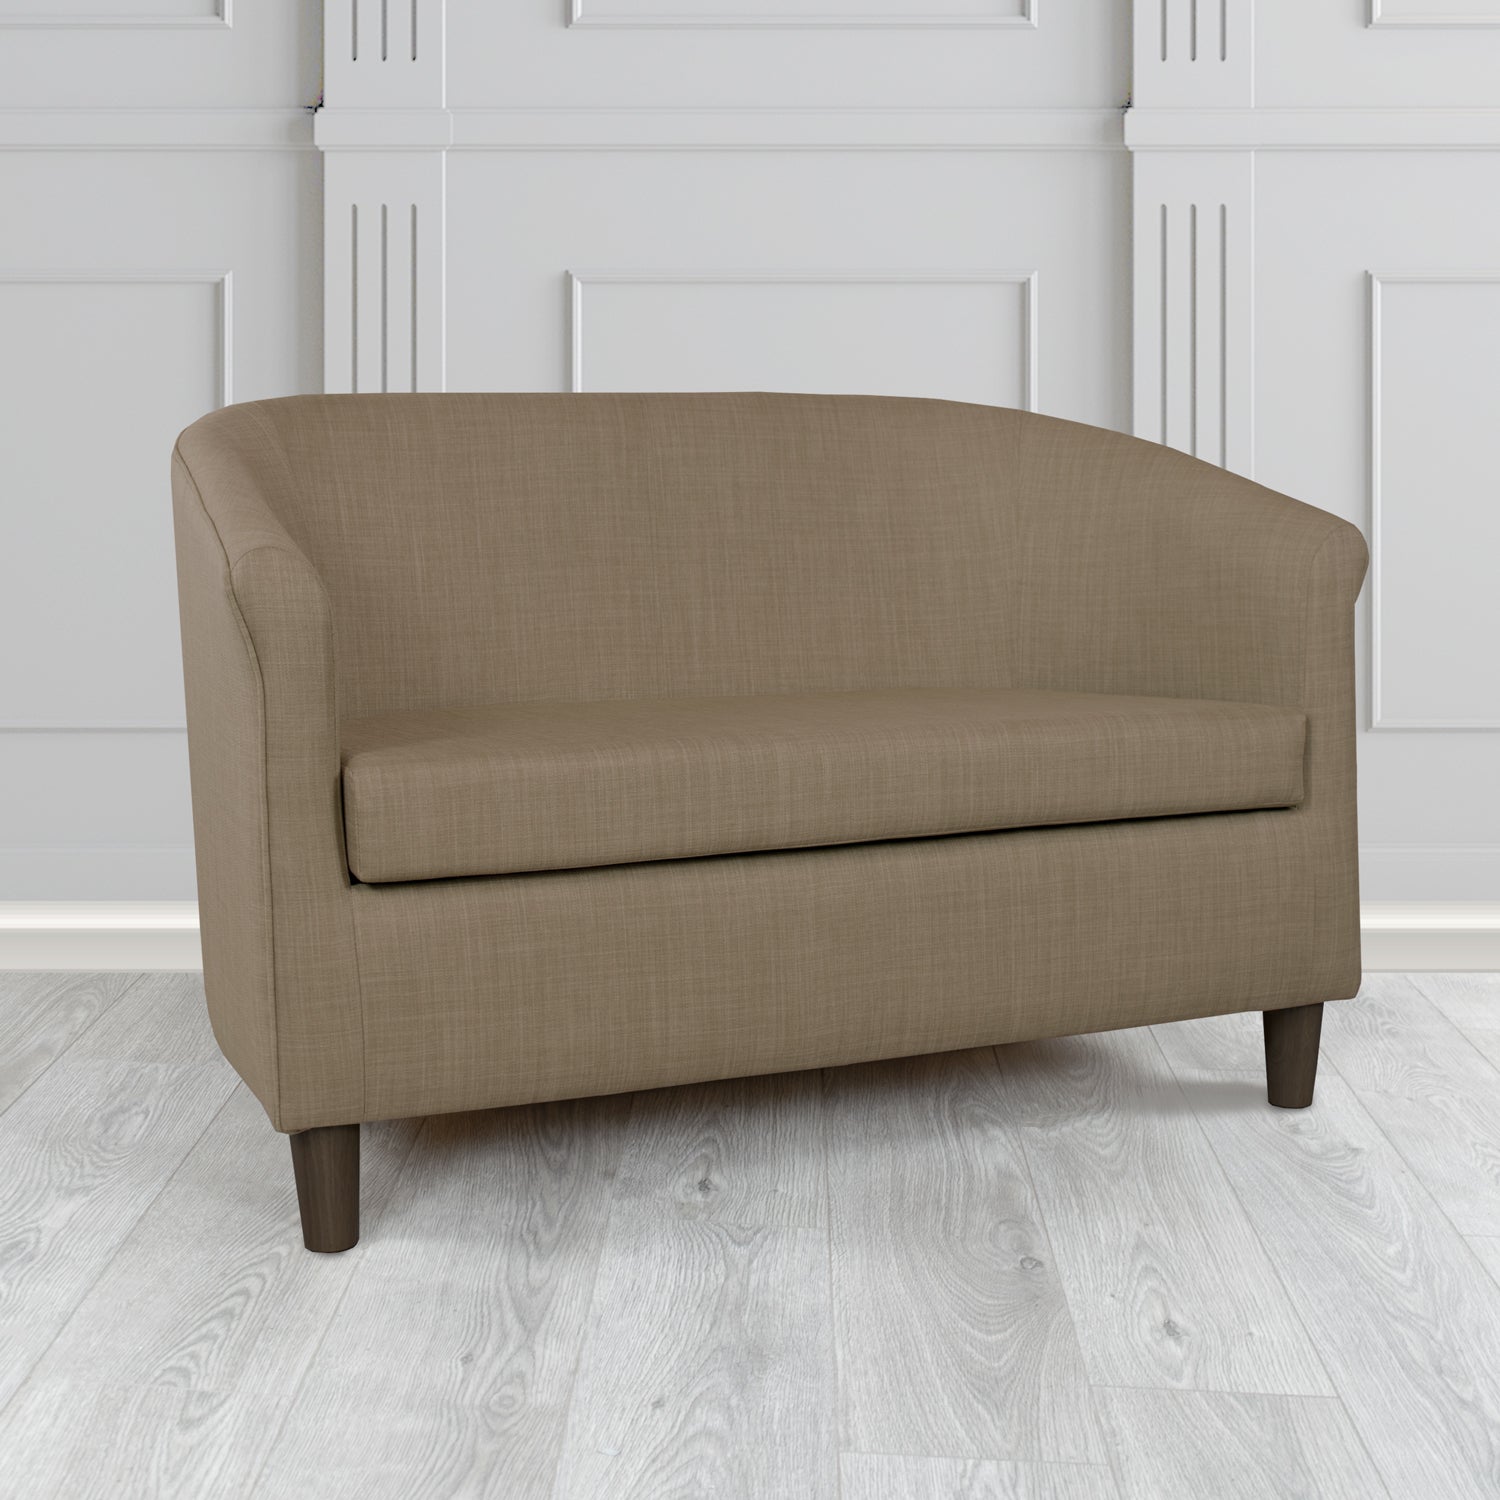 Tuscany Charles Nutmeg Plain Linen Fabric 2 Seater Tub Sofa - The Tub Chair Shop